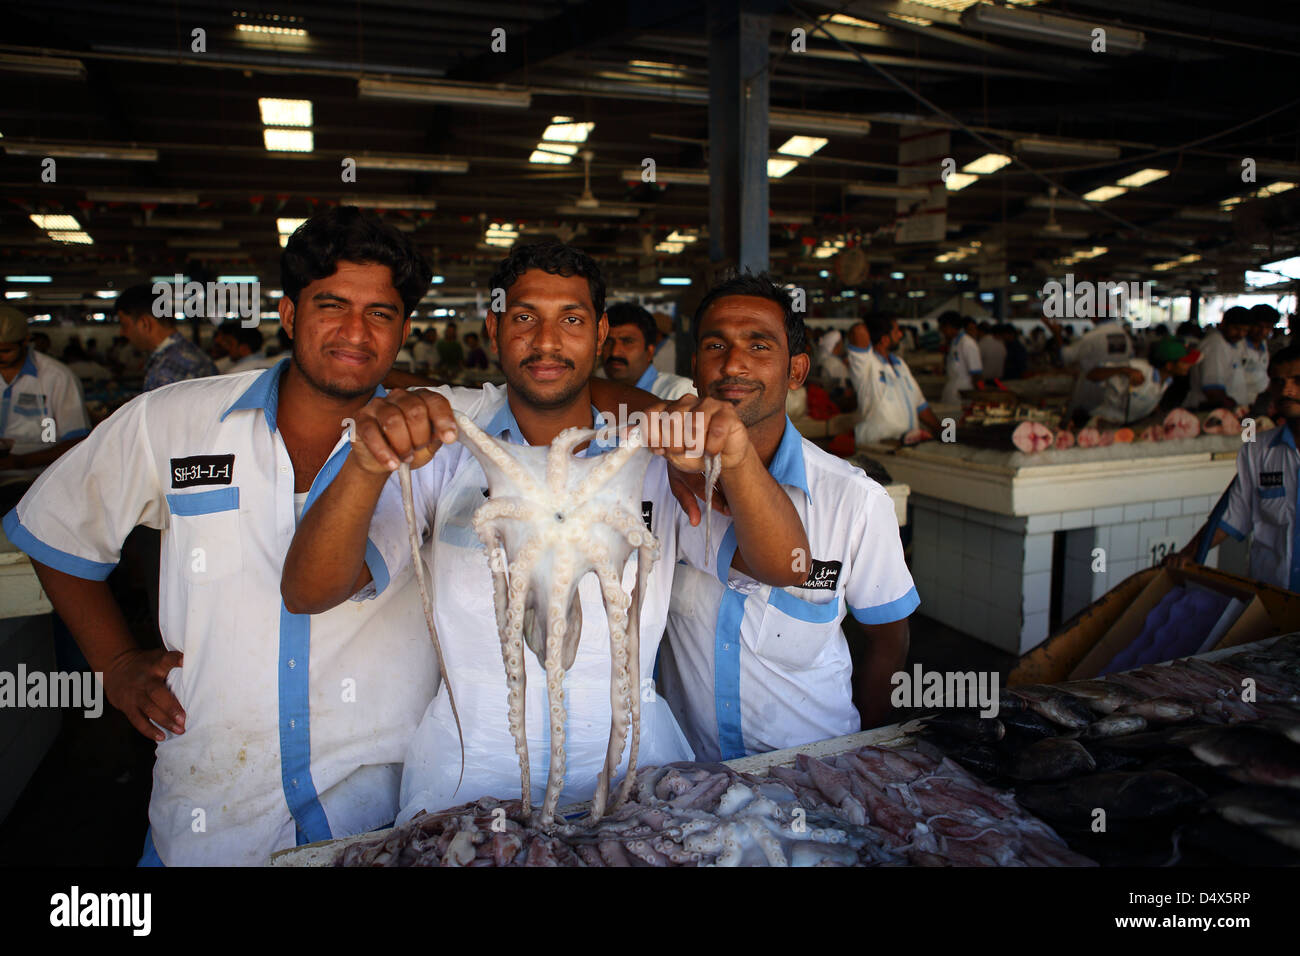 Three men pose for photo with octopus at market in Dubai, United Arab Emirates Stock Photo